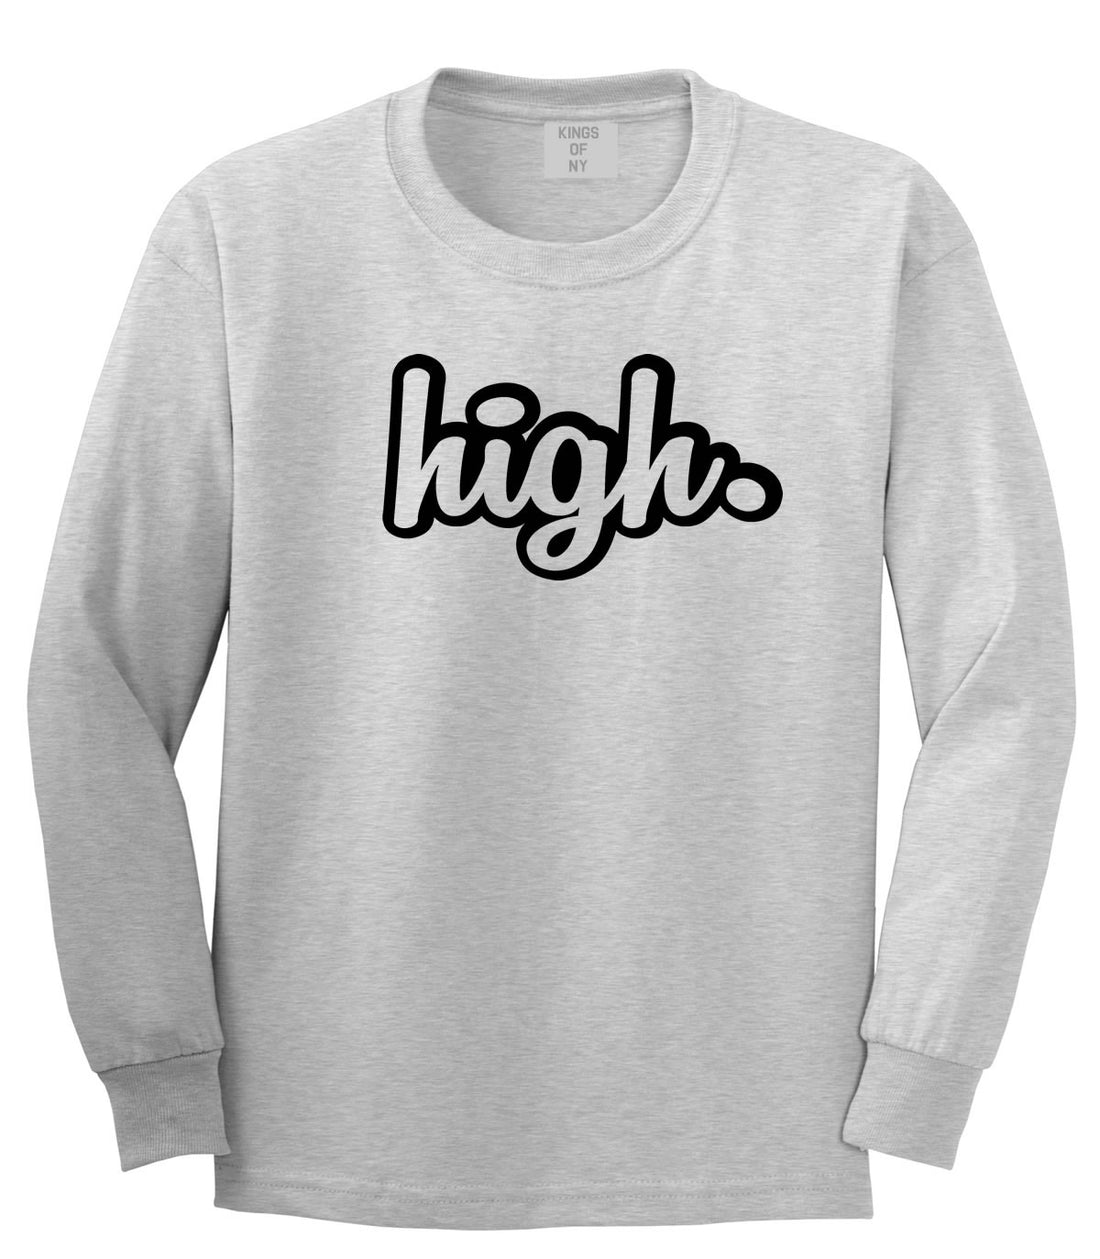 High Weed Faded Dap Smoke Marijuana Long Sleeve Boys Kids T-Shirt In Grey by Kings Of NY